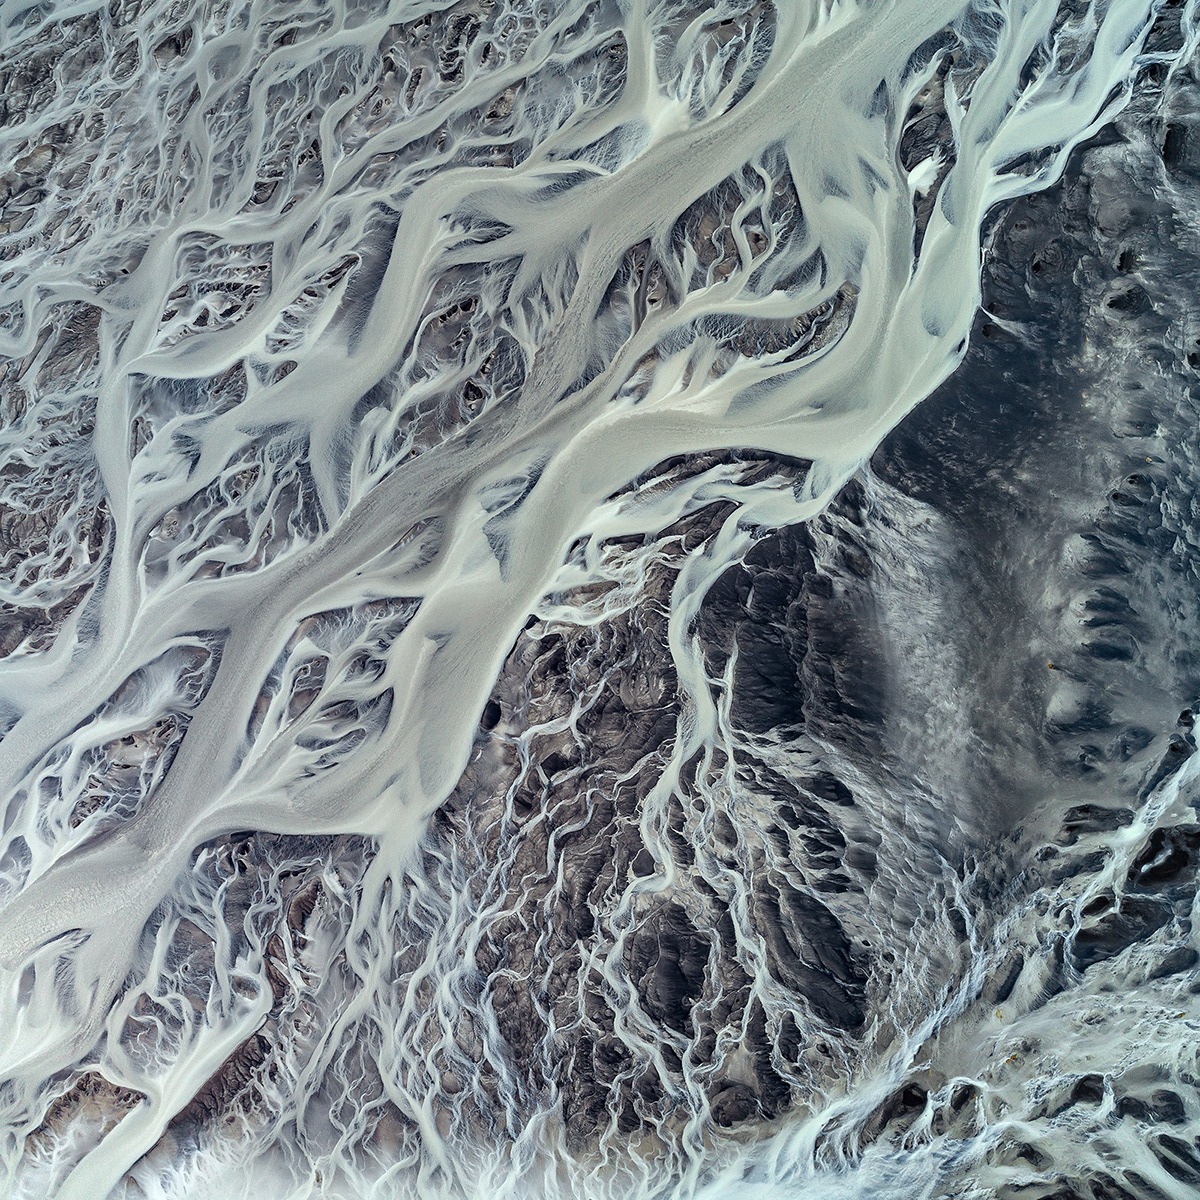 milan-radisics-photography-glacial-flow-landscape-art-photo-02.jpg